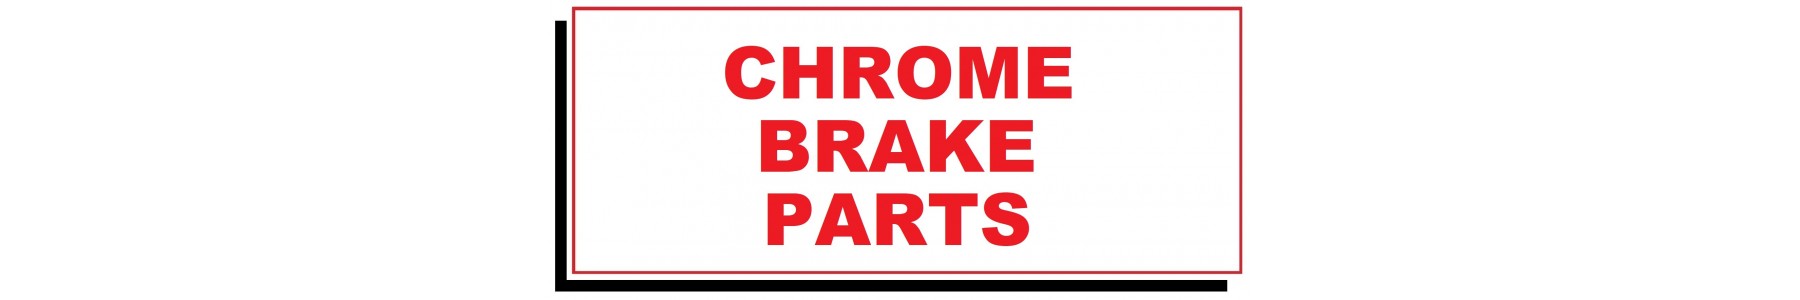 CHROME BRAKE PARTS